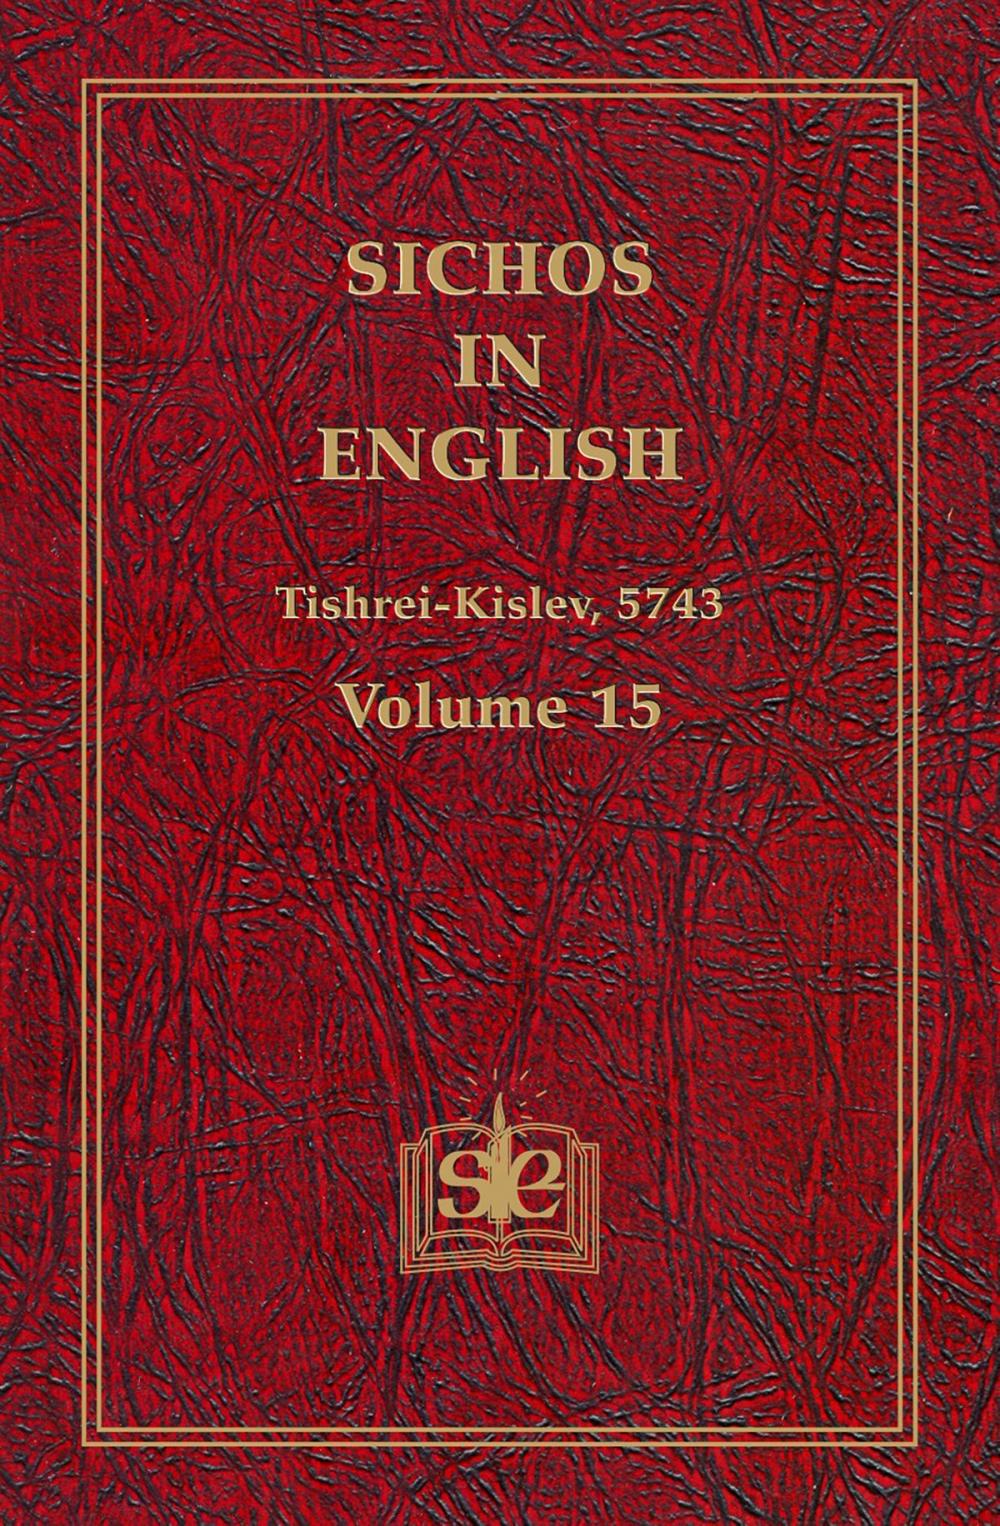 Big bigCover of Sichos In English, Volume 15: Tishrei-Kislev, 5743